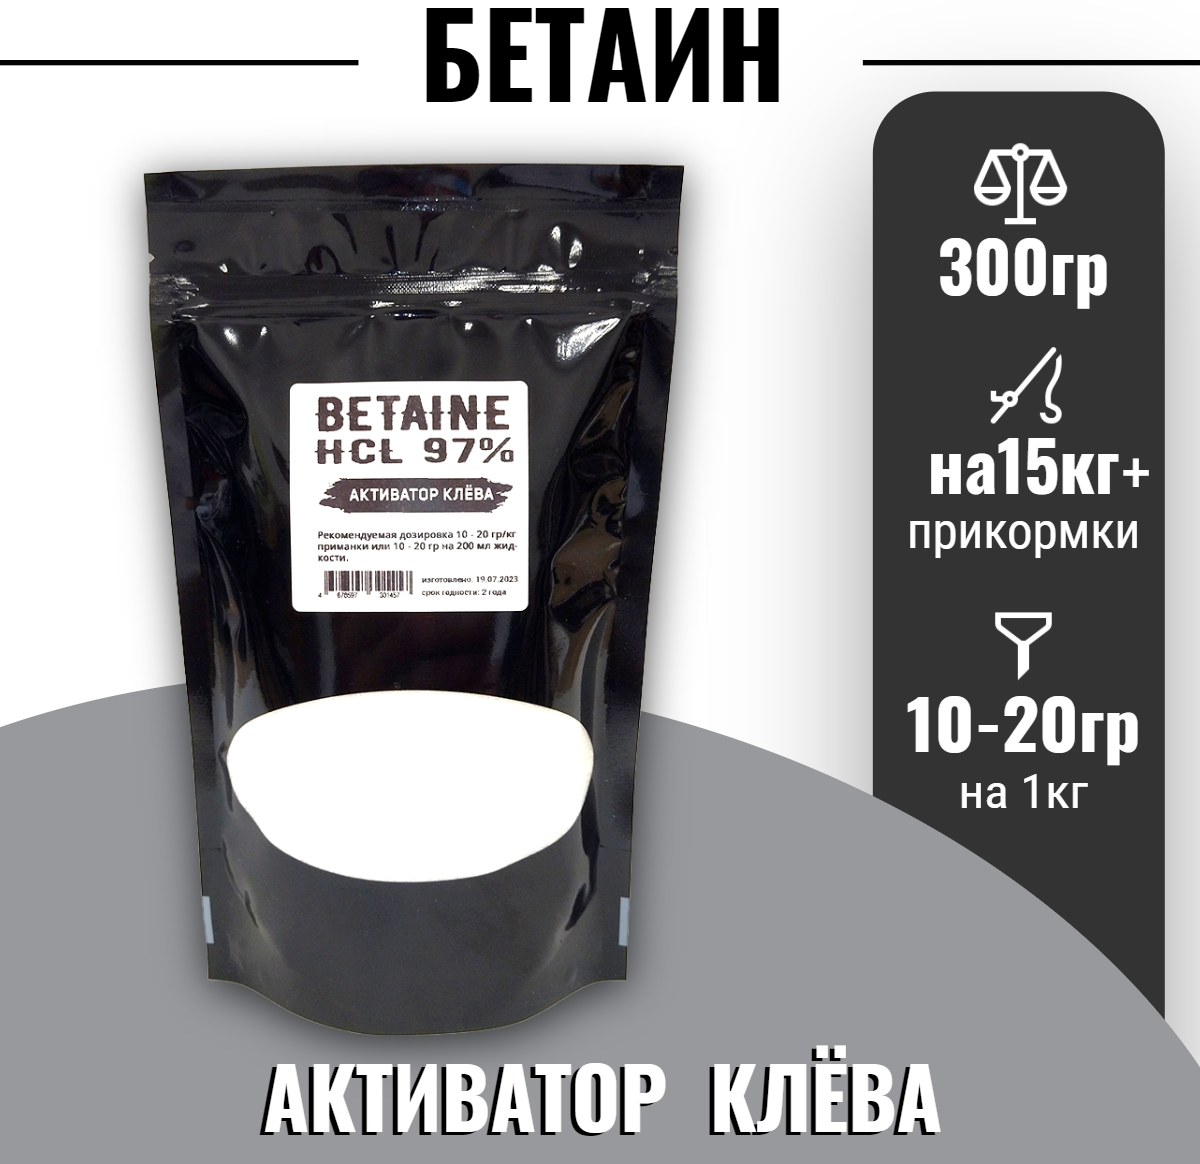 Бетаин гидрохлорид 97% BAITSFISHING, натуральная кормовая добавка для активации клёва, 300гр.